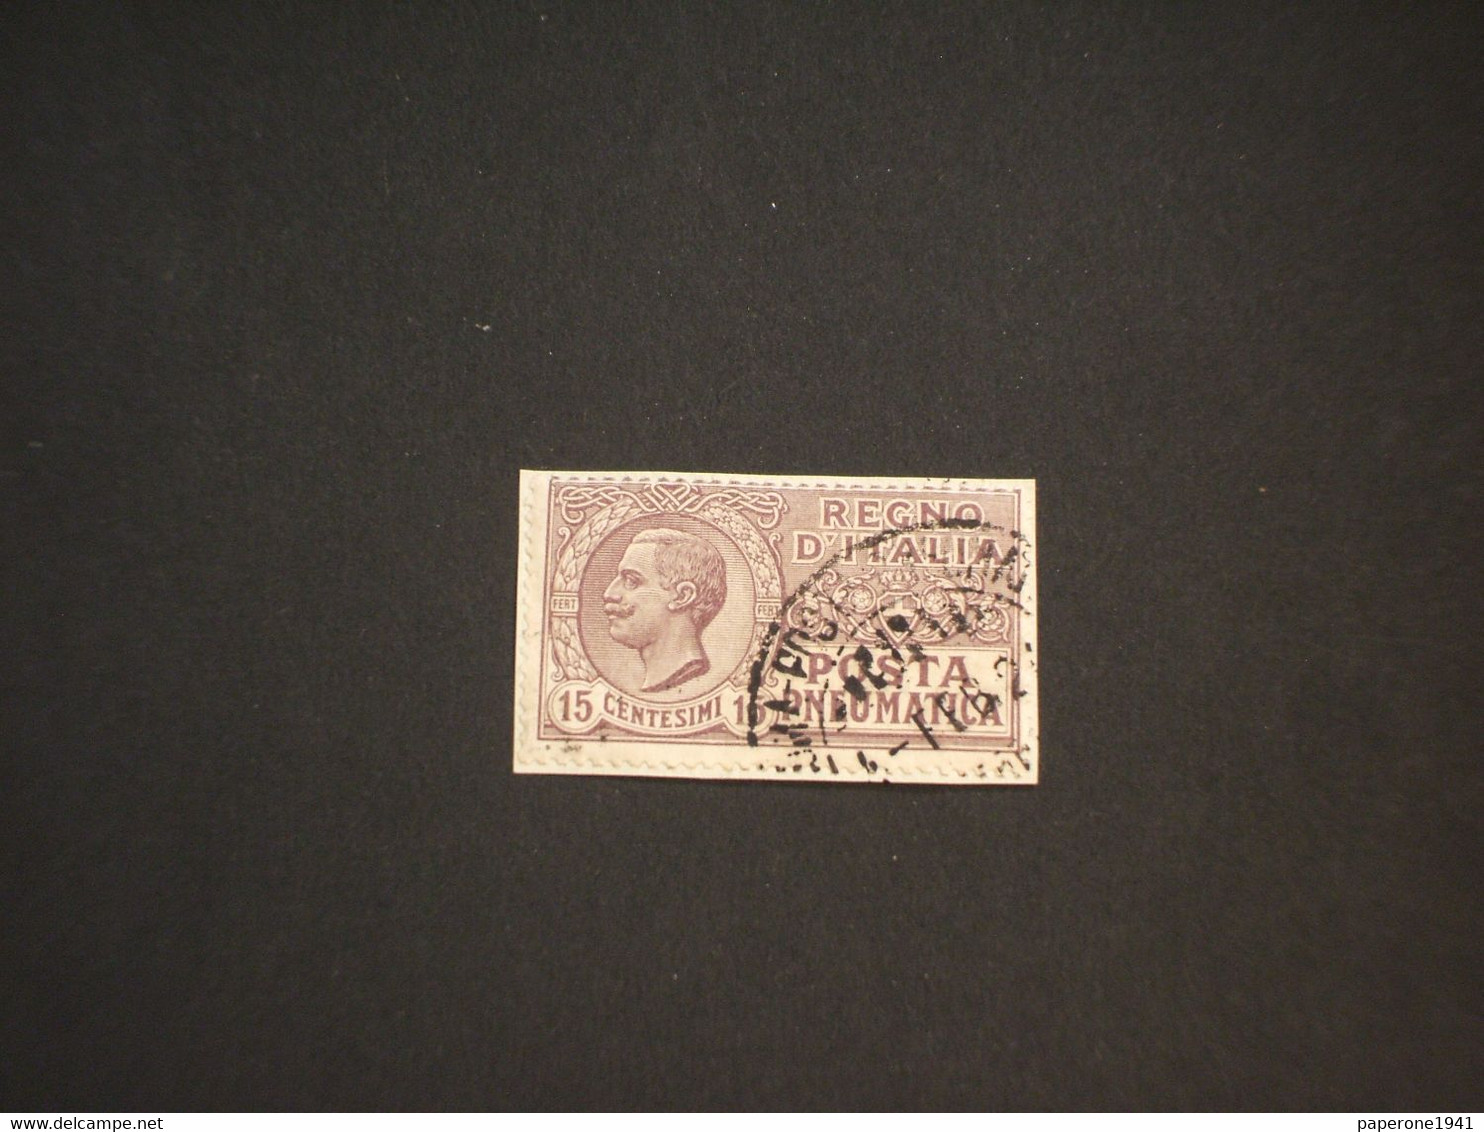 ITALIA - POSTA PNEUMATICA - 1913/23 RE 15 C. - TIMBRATO/USED - Pneumatic Mail